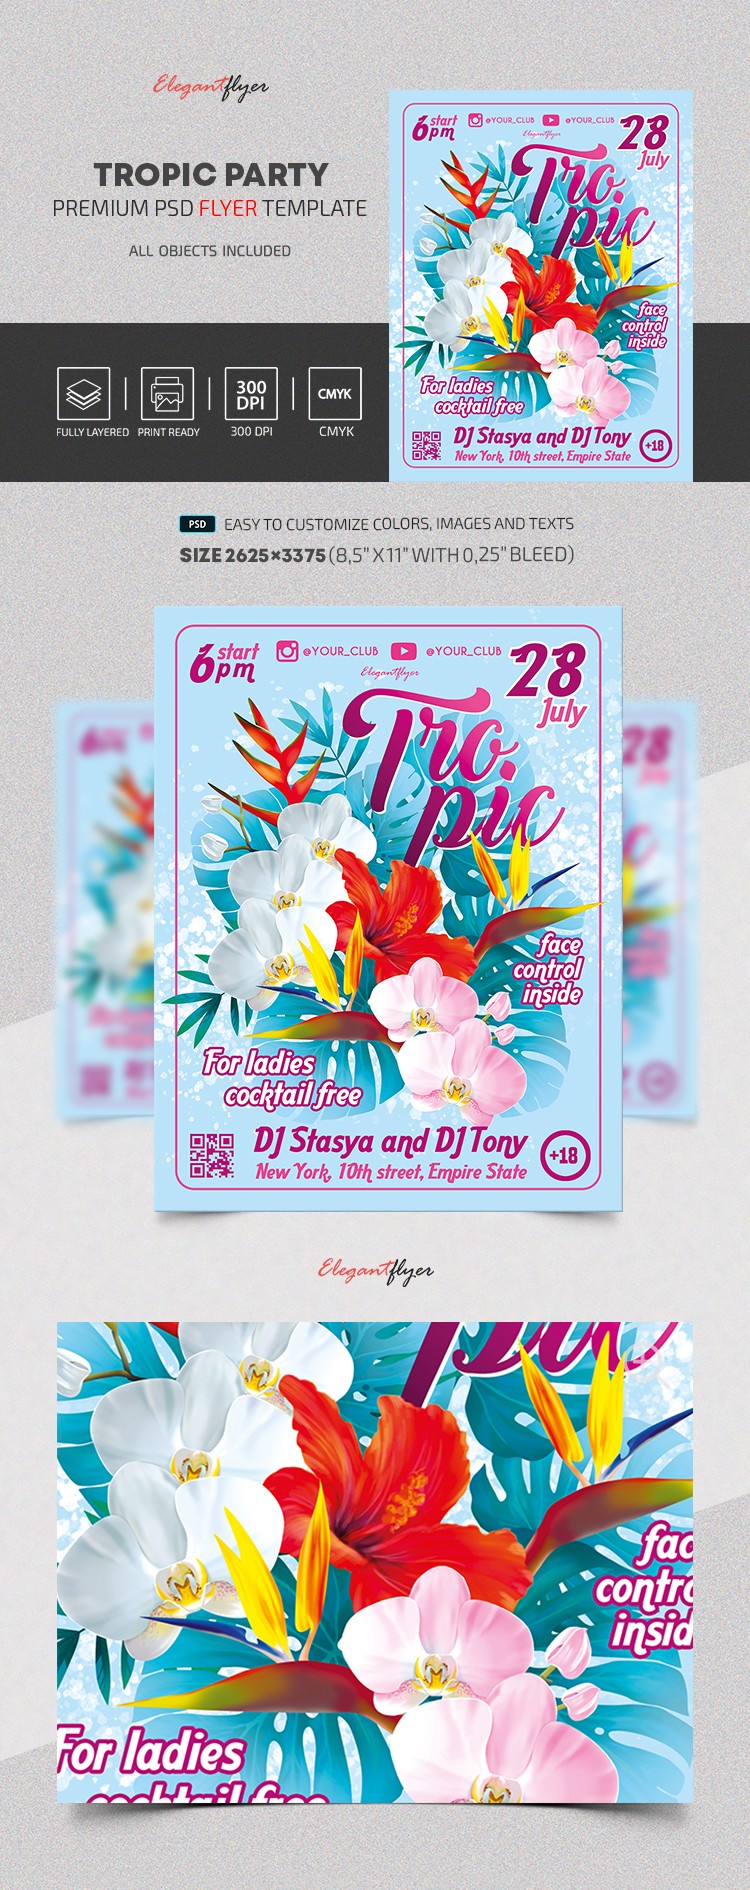 Tropic Party Flyer: Flyer de fête tropicale by ElegantFlyer